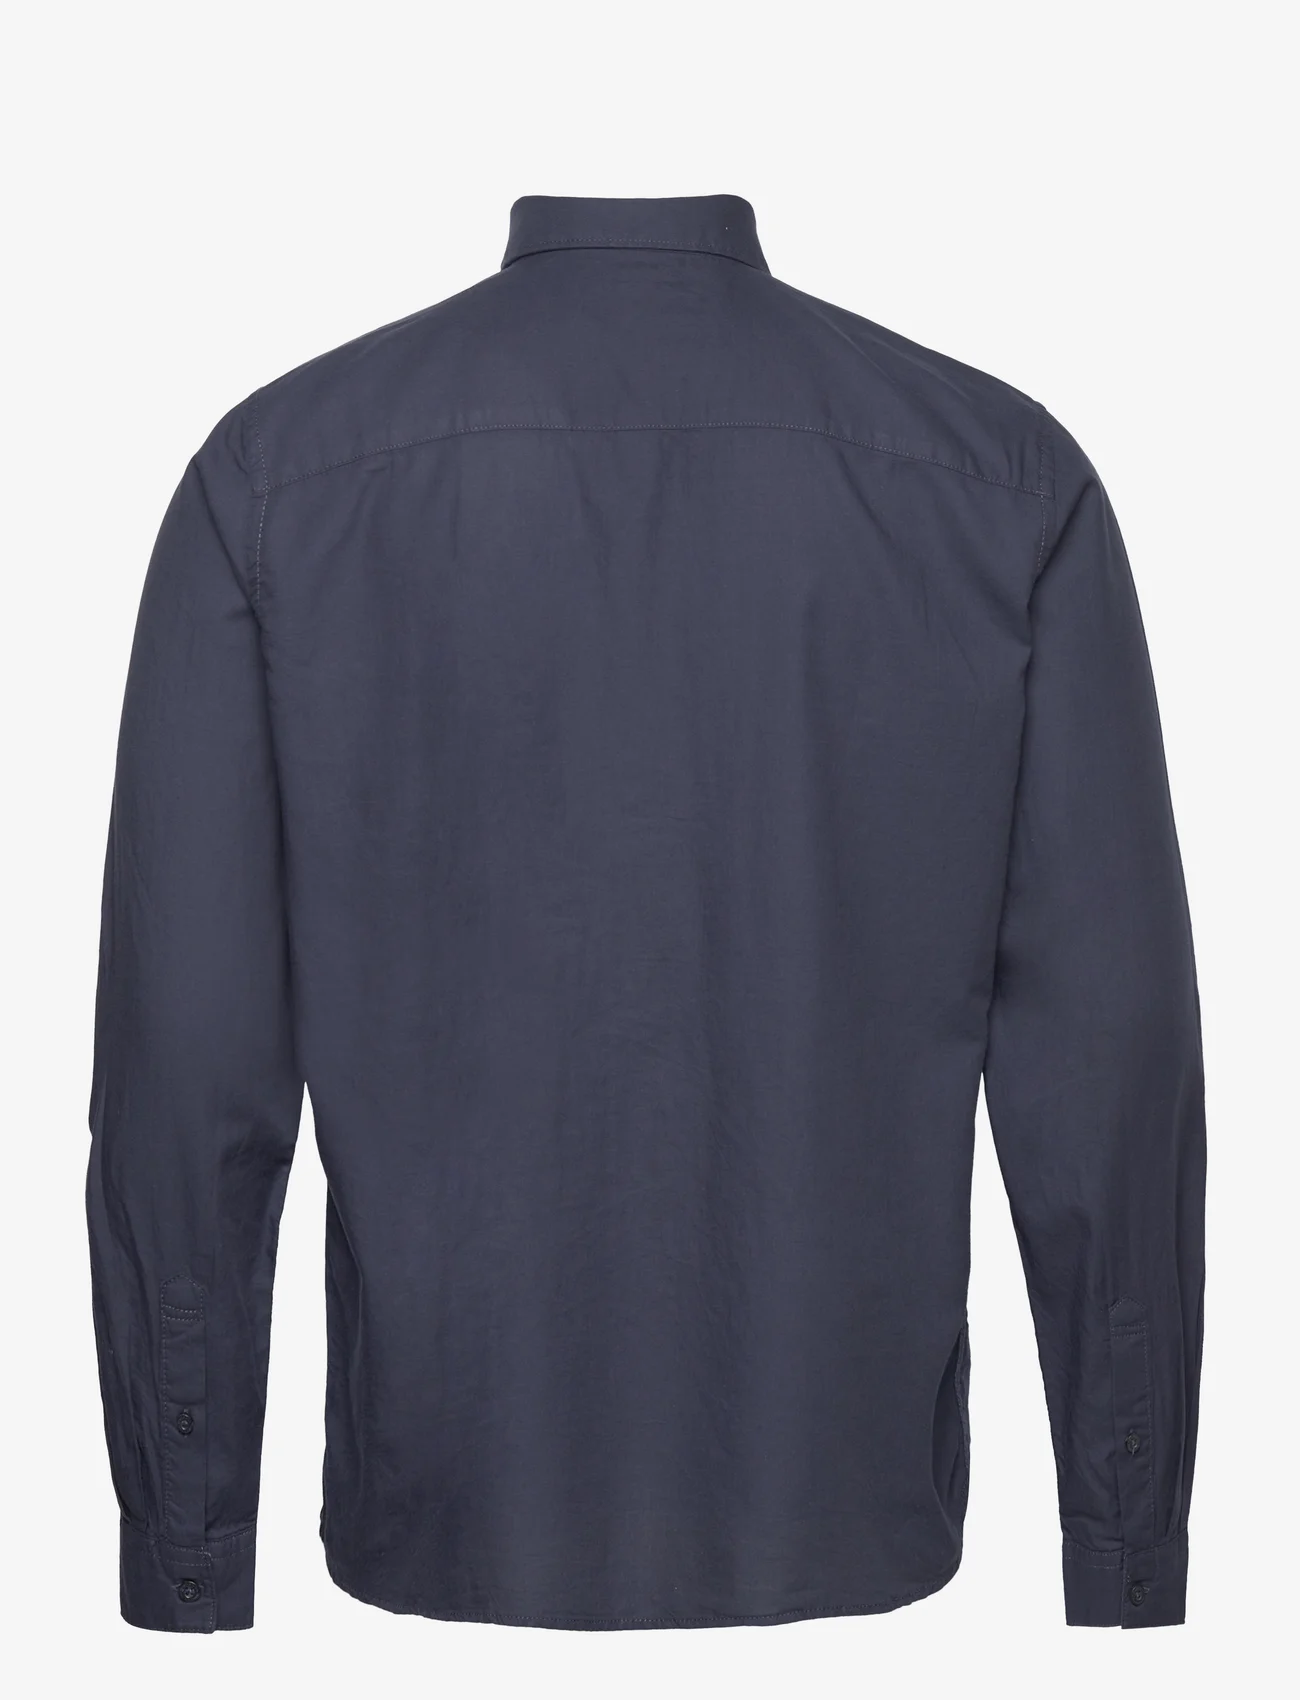 Tom Tailor - smart shirt - muodolliset kauluspaidat - sky captain blue - 1